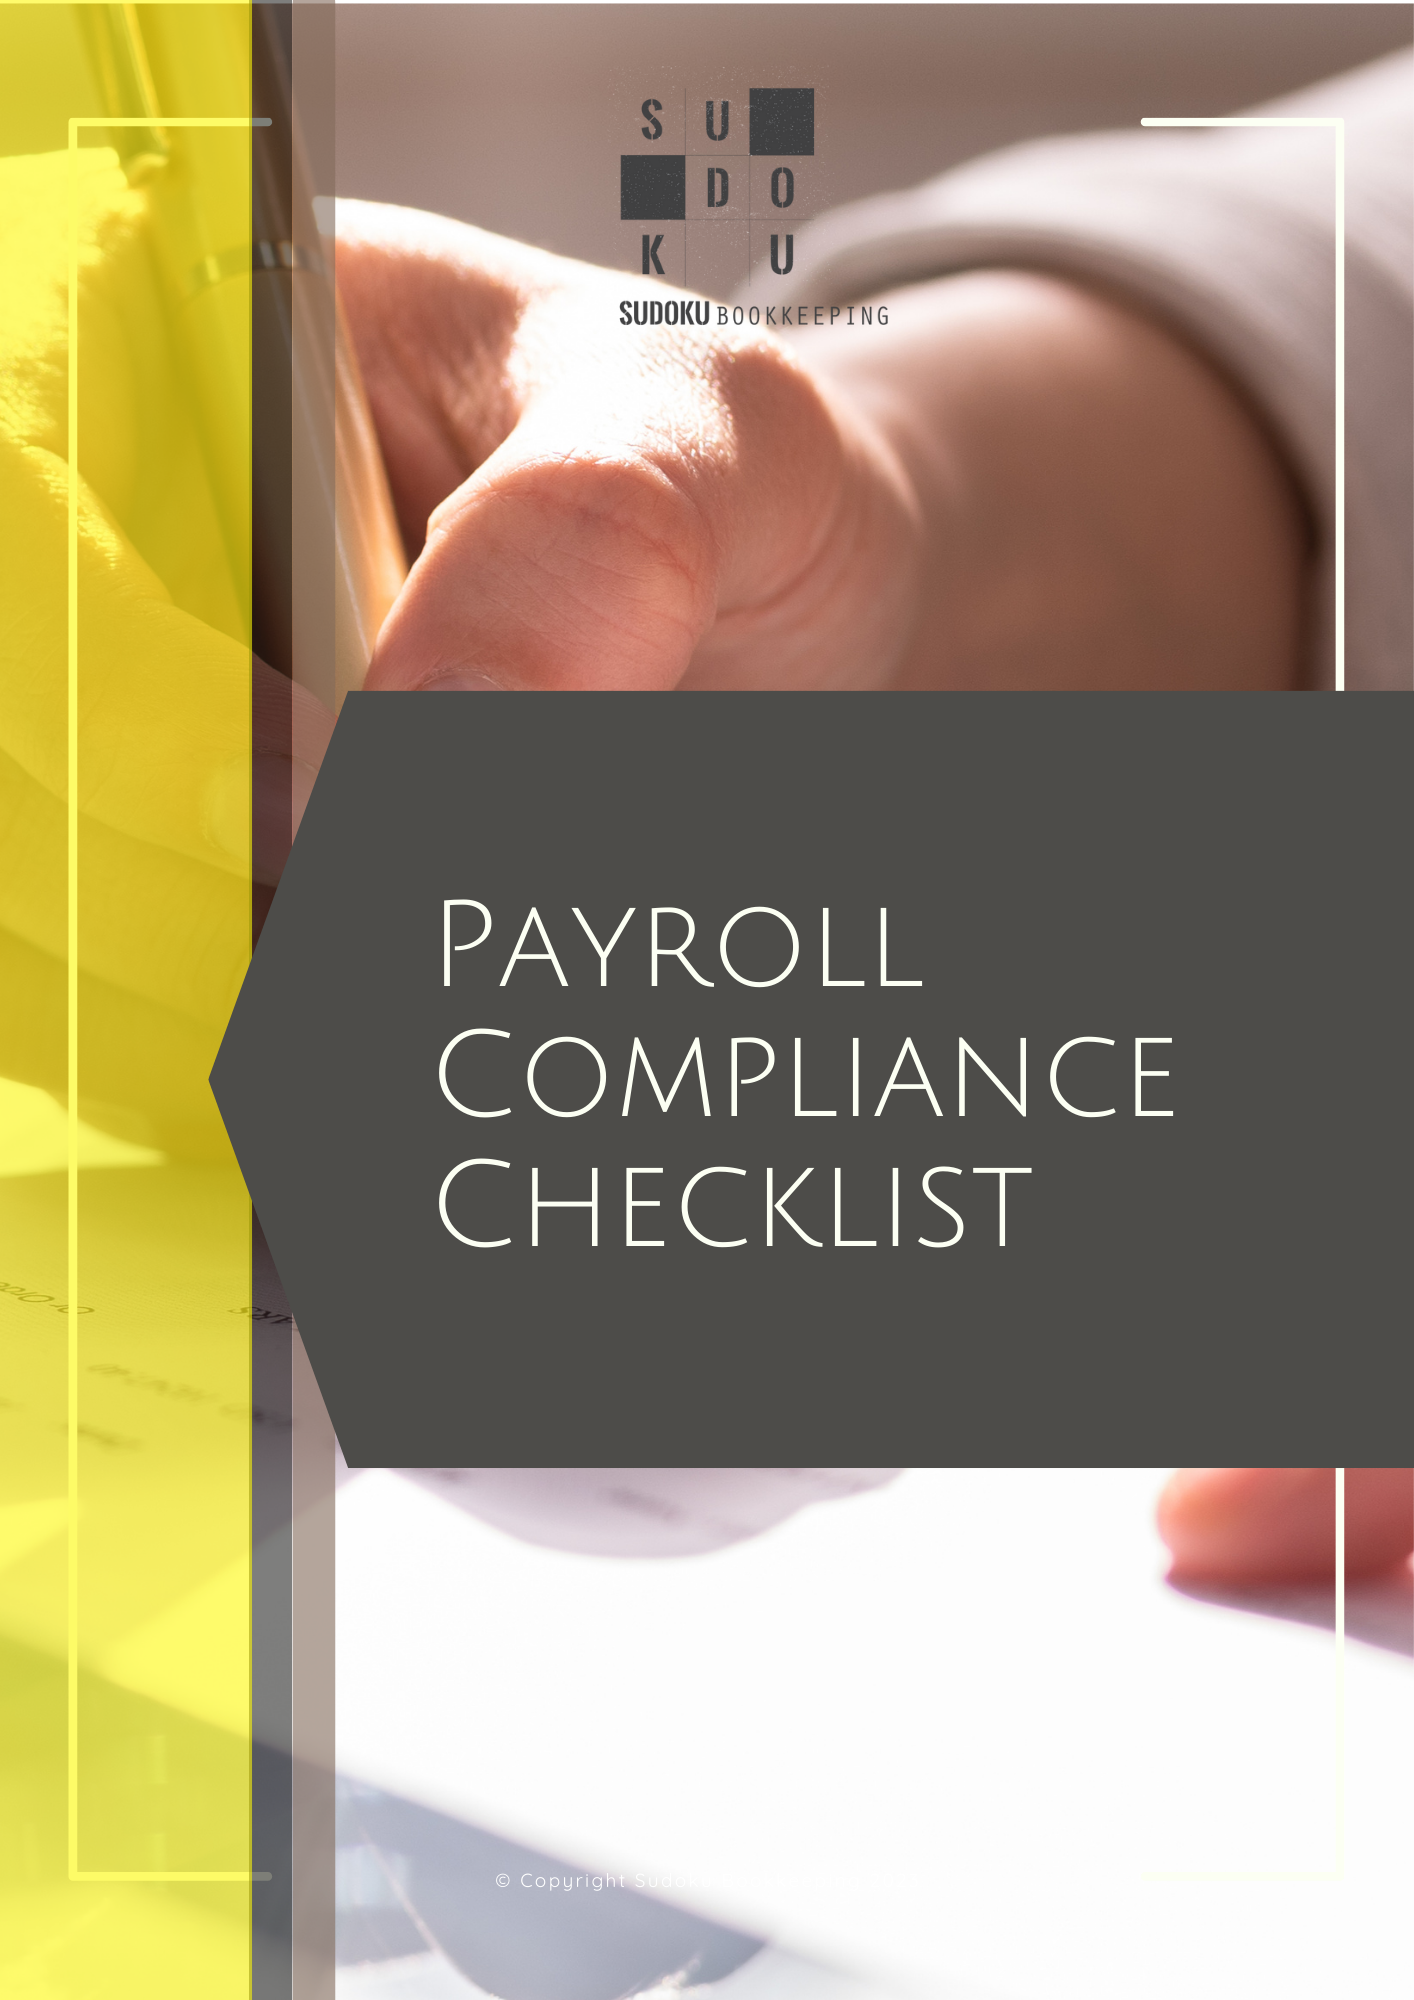 Sudoku Bookkeeping - Payroll Compliance Checklist